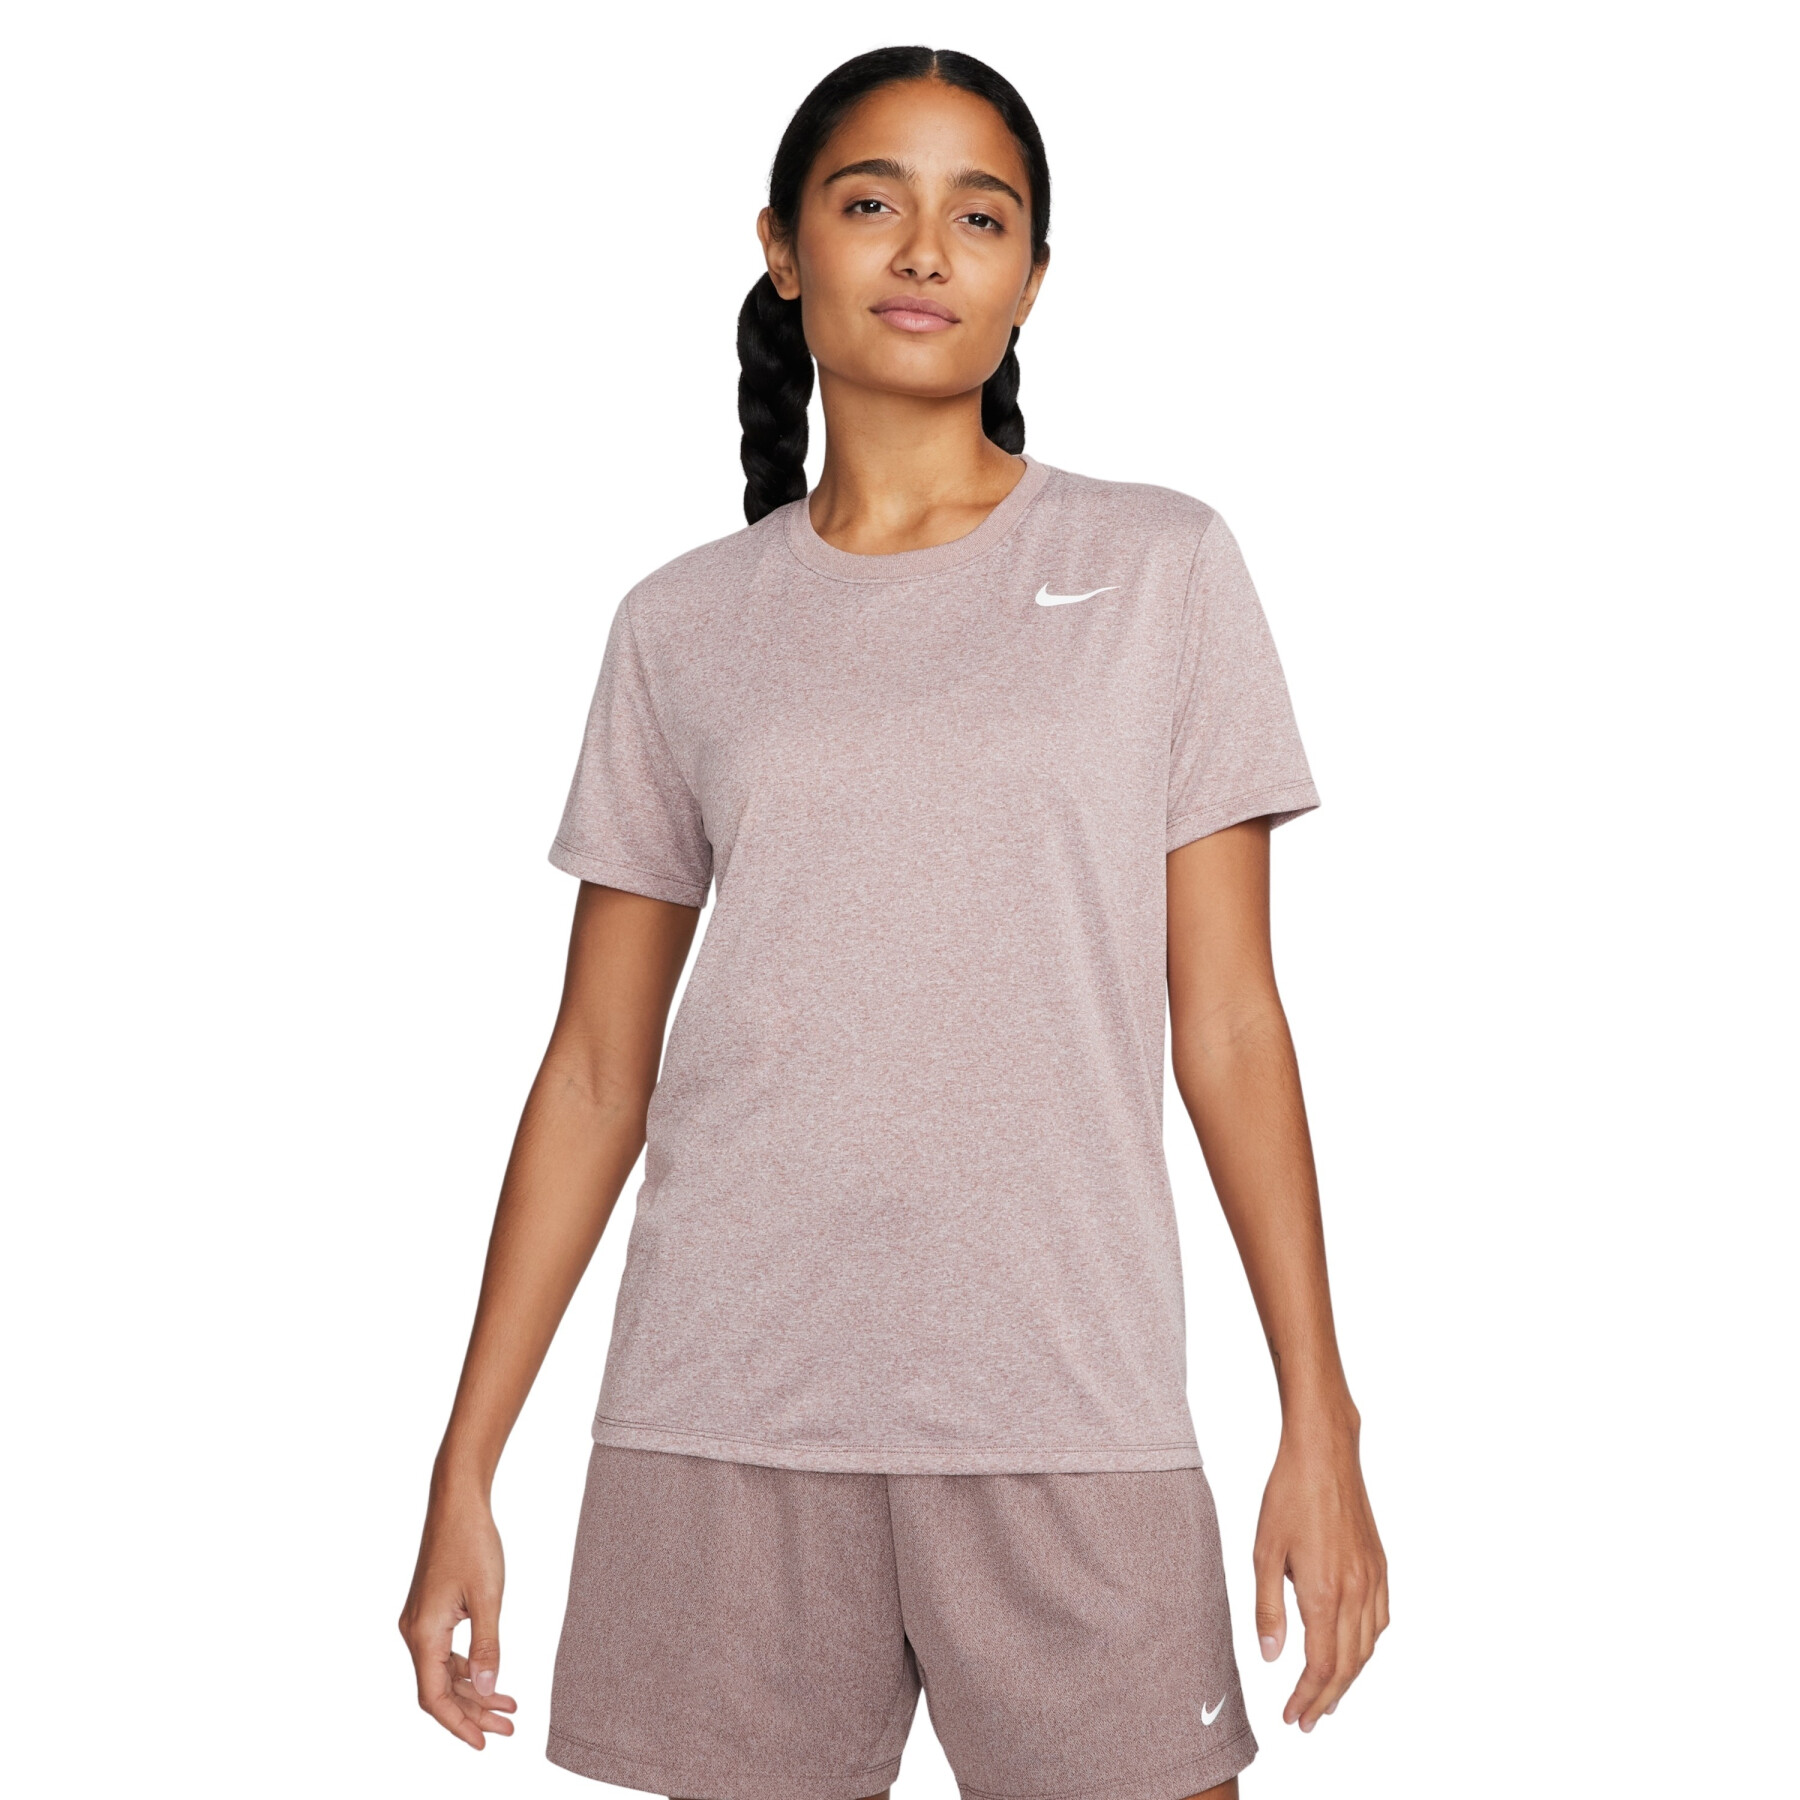 Camiseta mujer Nike Dri-FIT